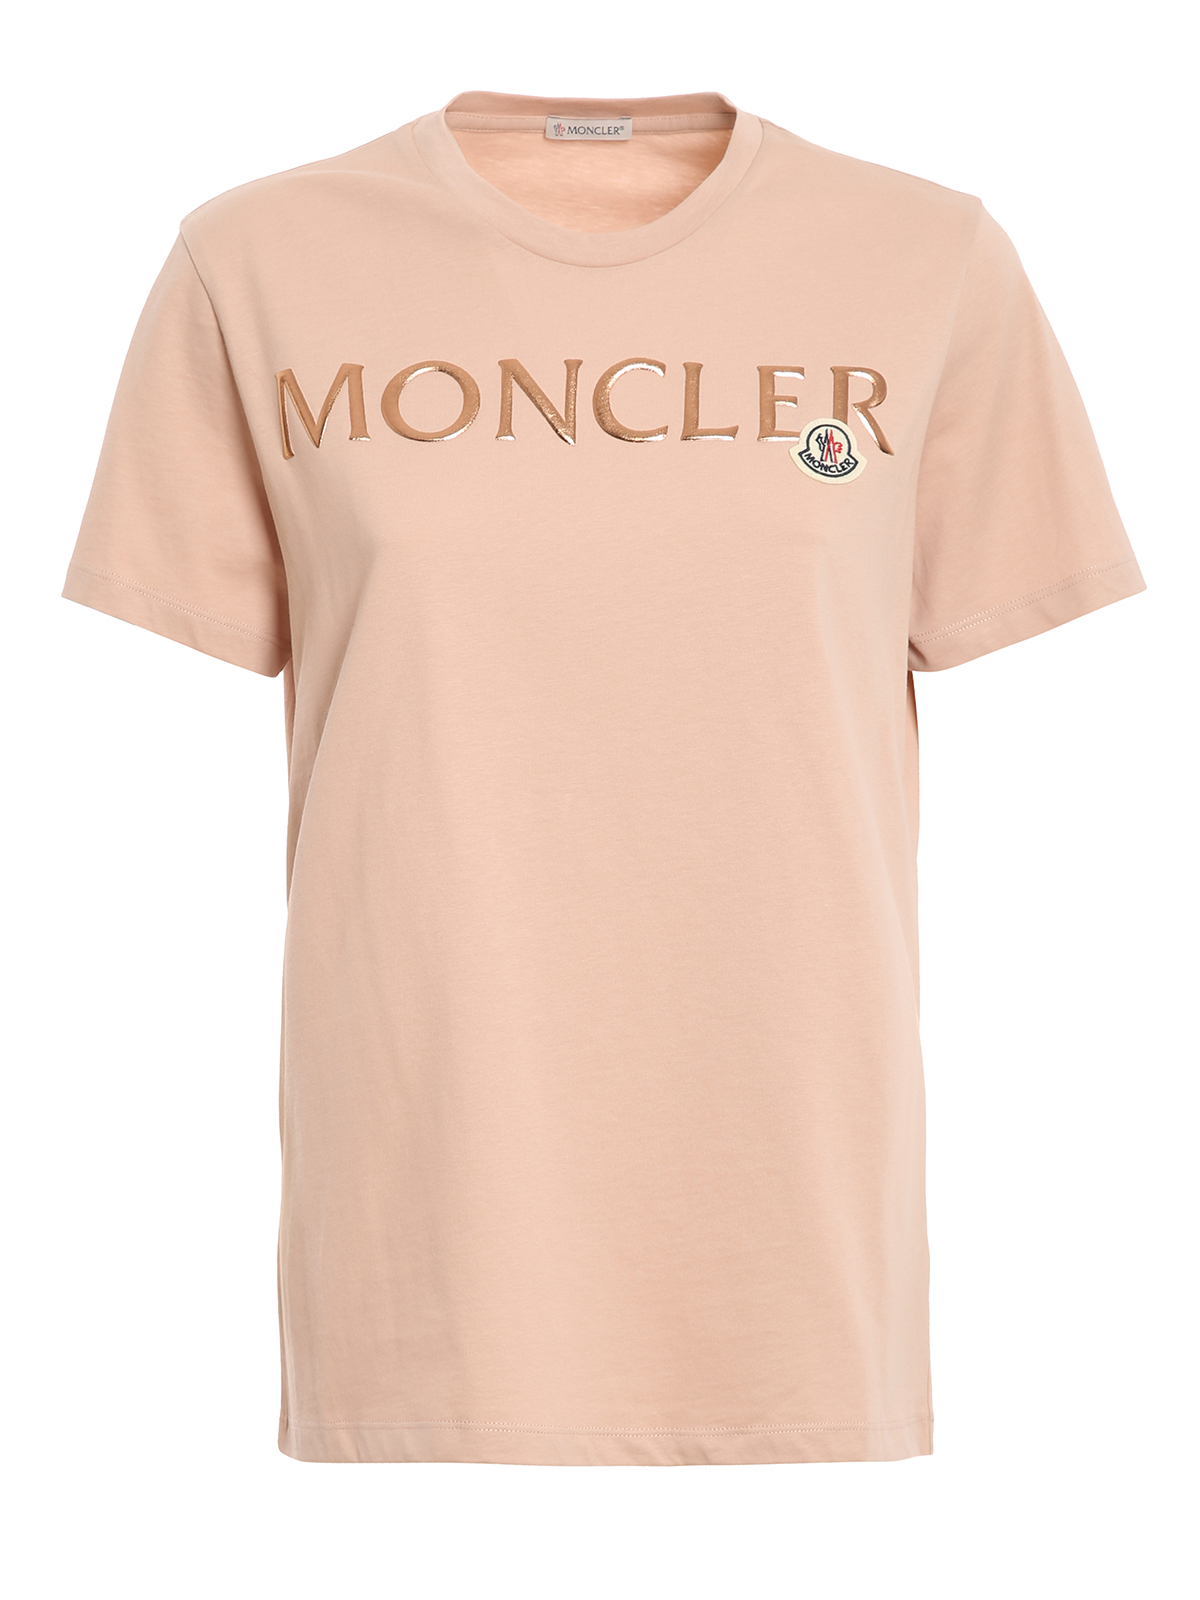 Tシャツ Moncler - Tシャツ - ピンク - 8C71510V8094510 | THEBS